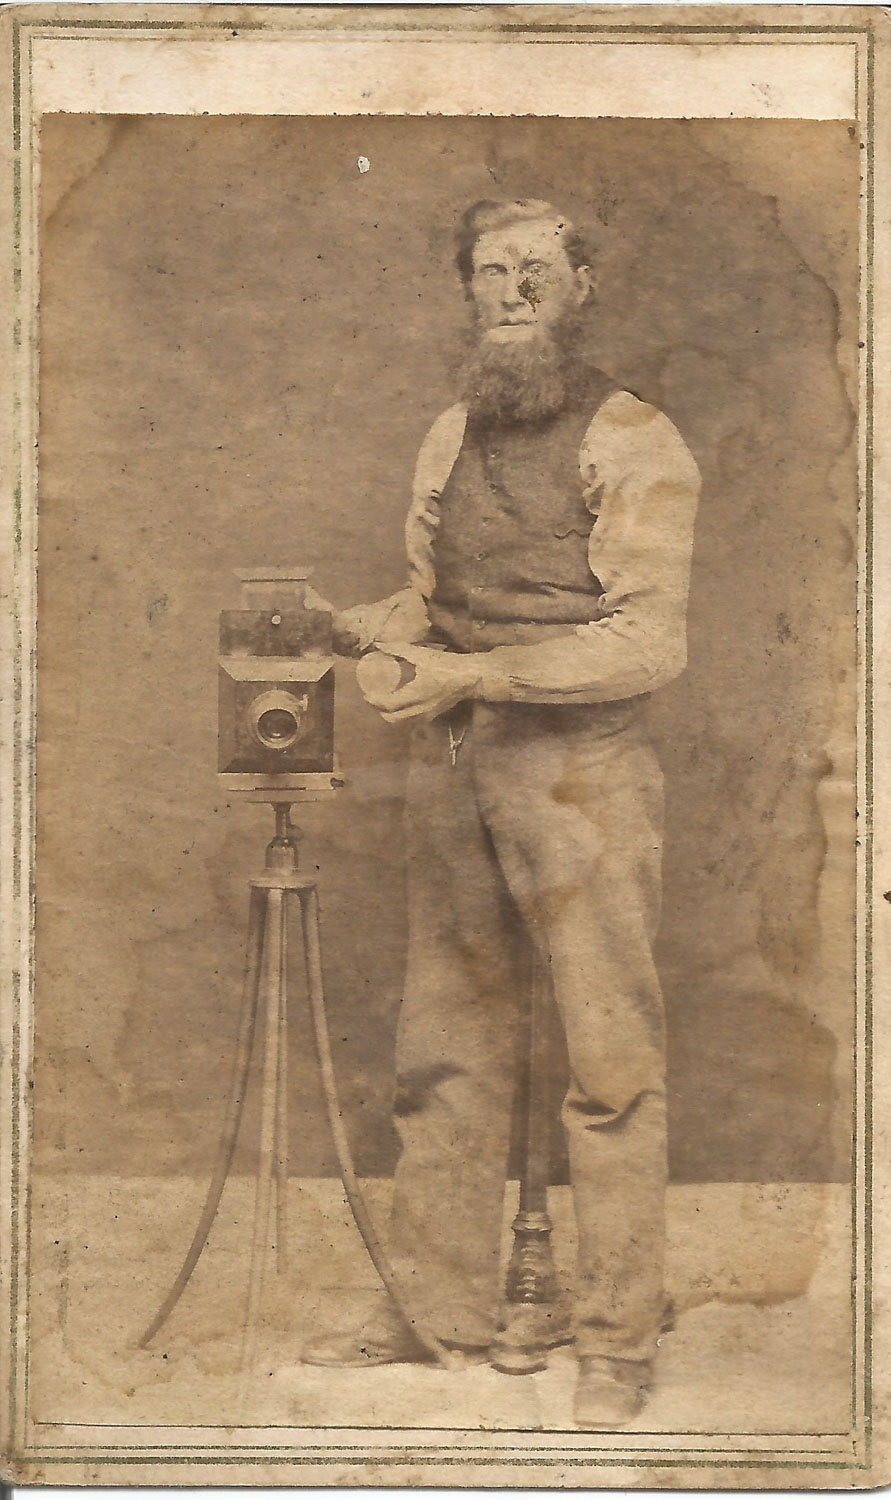 F.J. Moulton with Camera